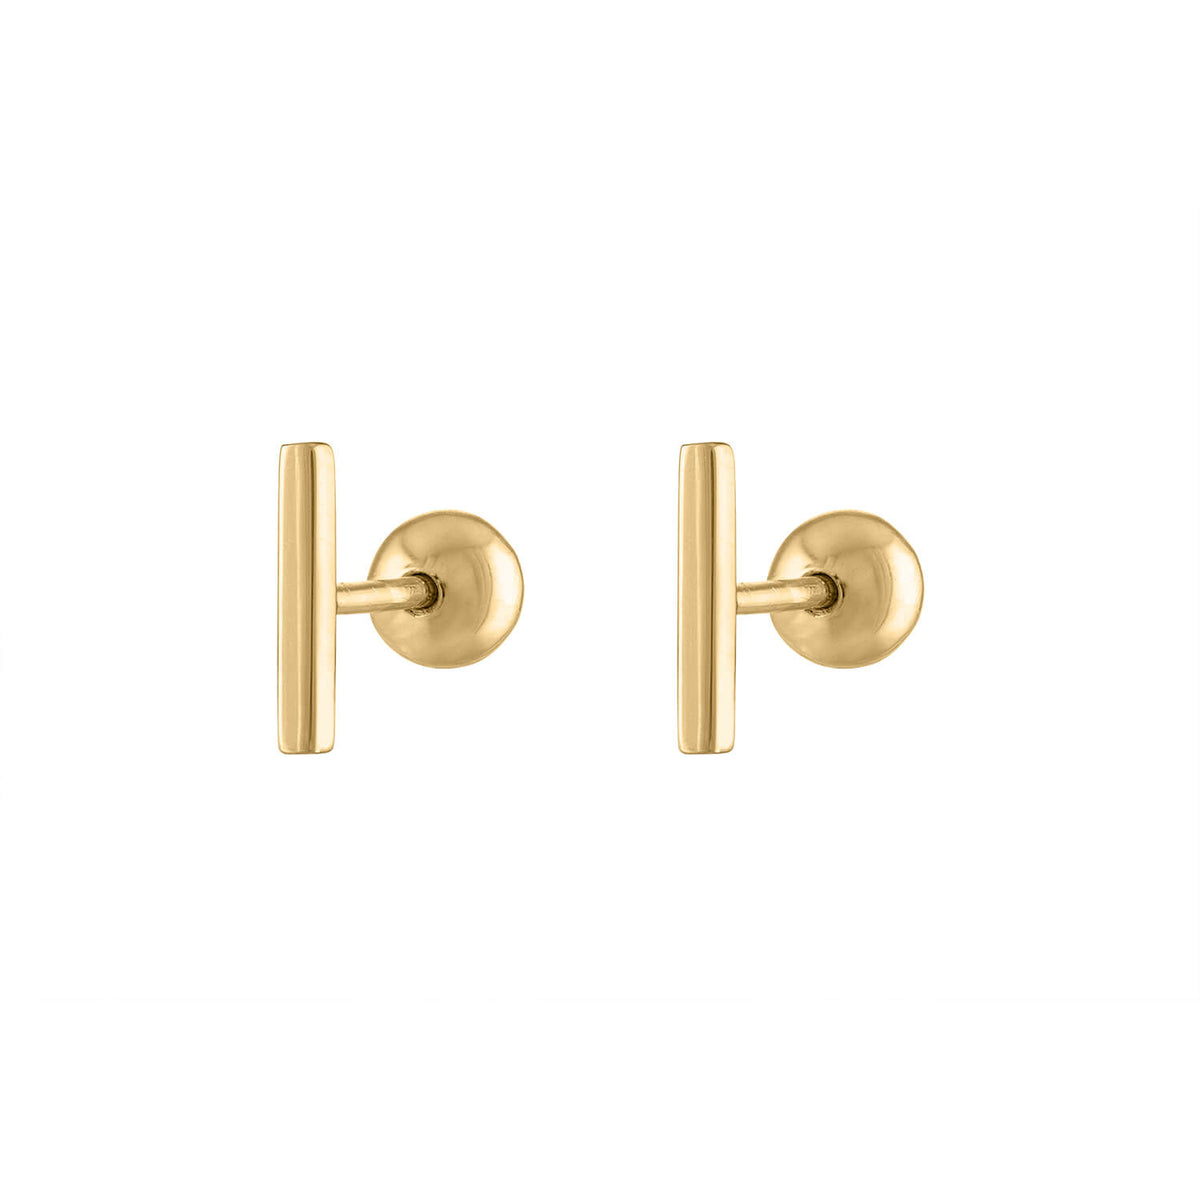 Tiny Secret Ball Back Earrings in 14K Gold, Single Earring / Gold at Maison Miru